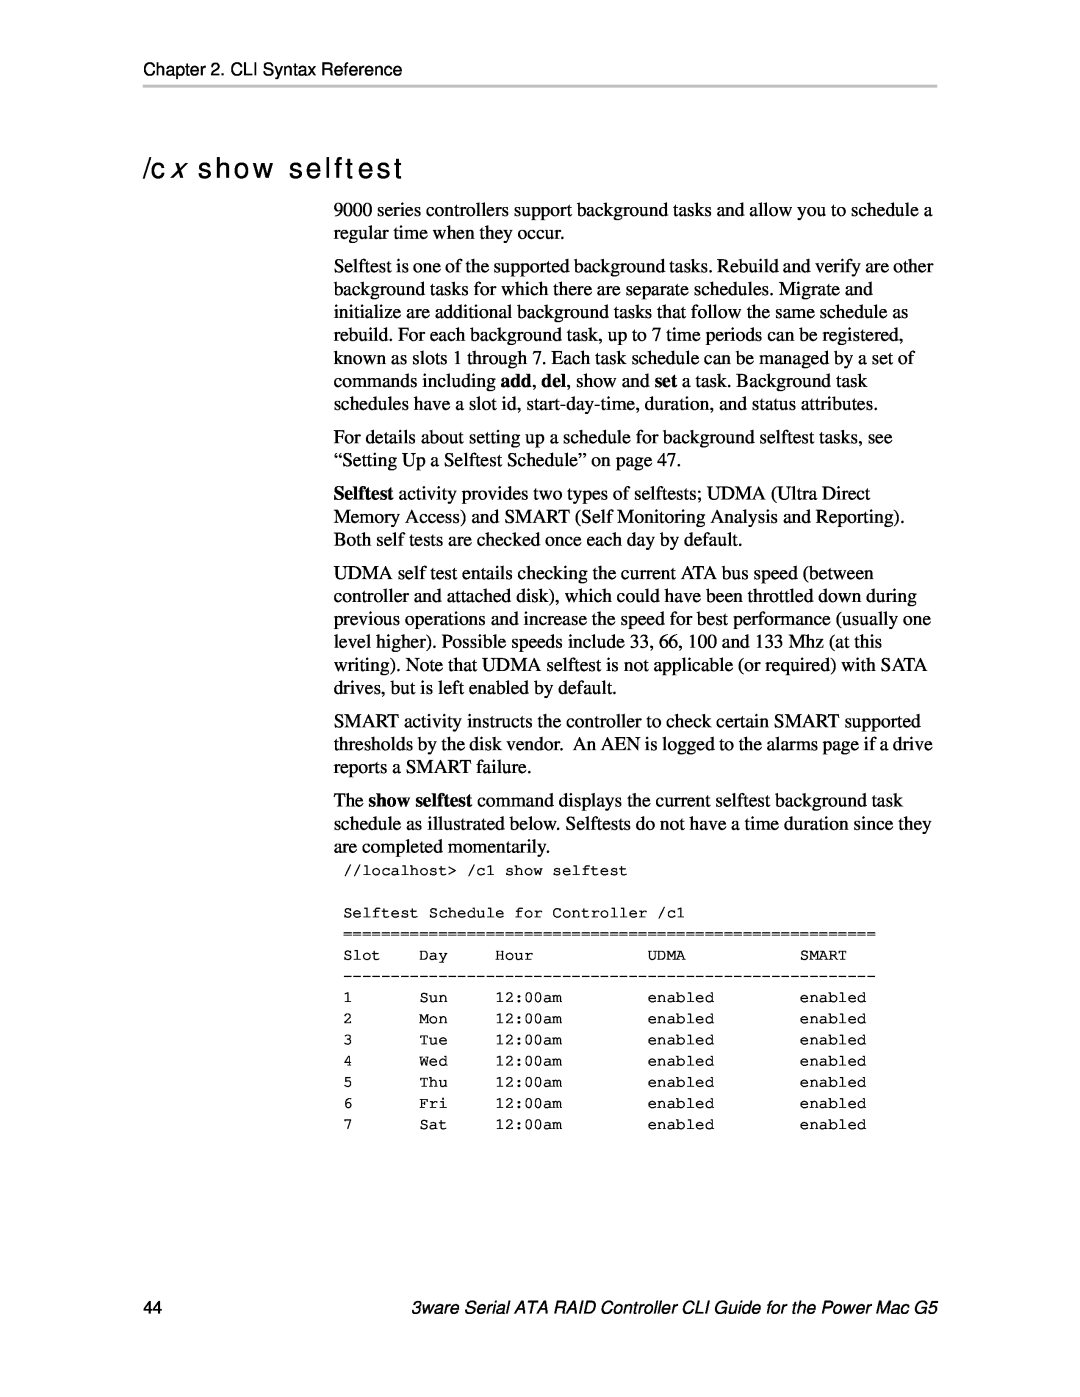 AMCC 9590SE-4ME manual cx show selftest, 3ware Serial ATA RAID Controller CLI Guide for the Power Mac G5 